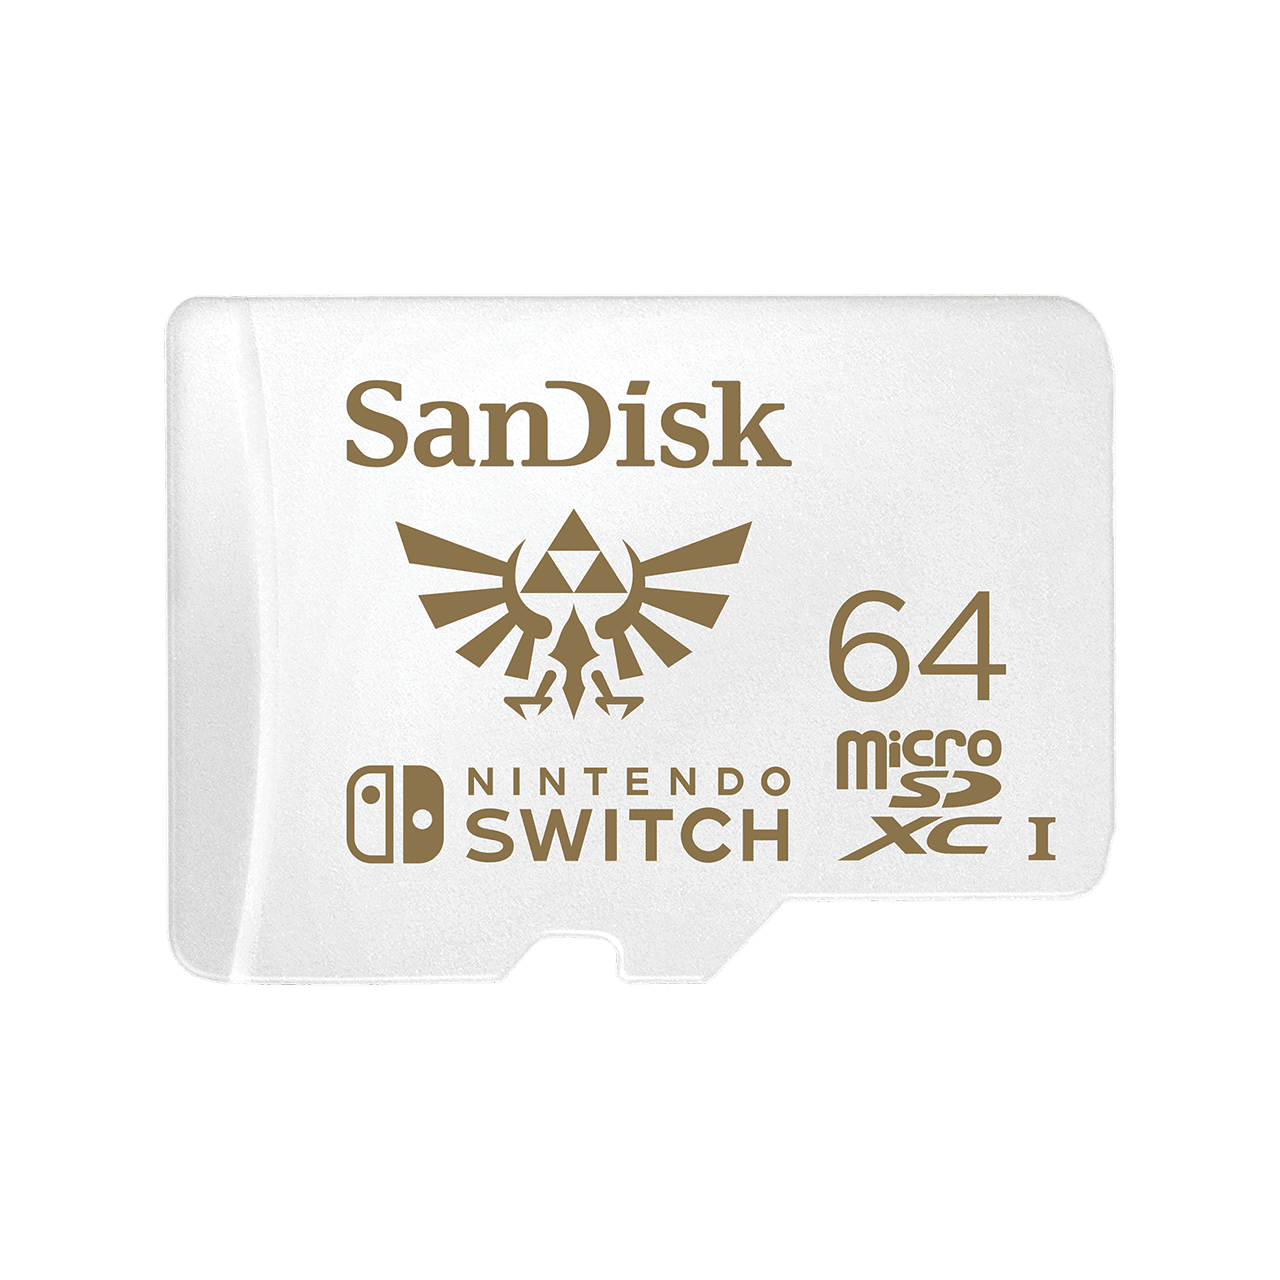 nintendo switch 128gb price